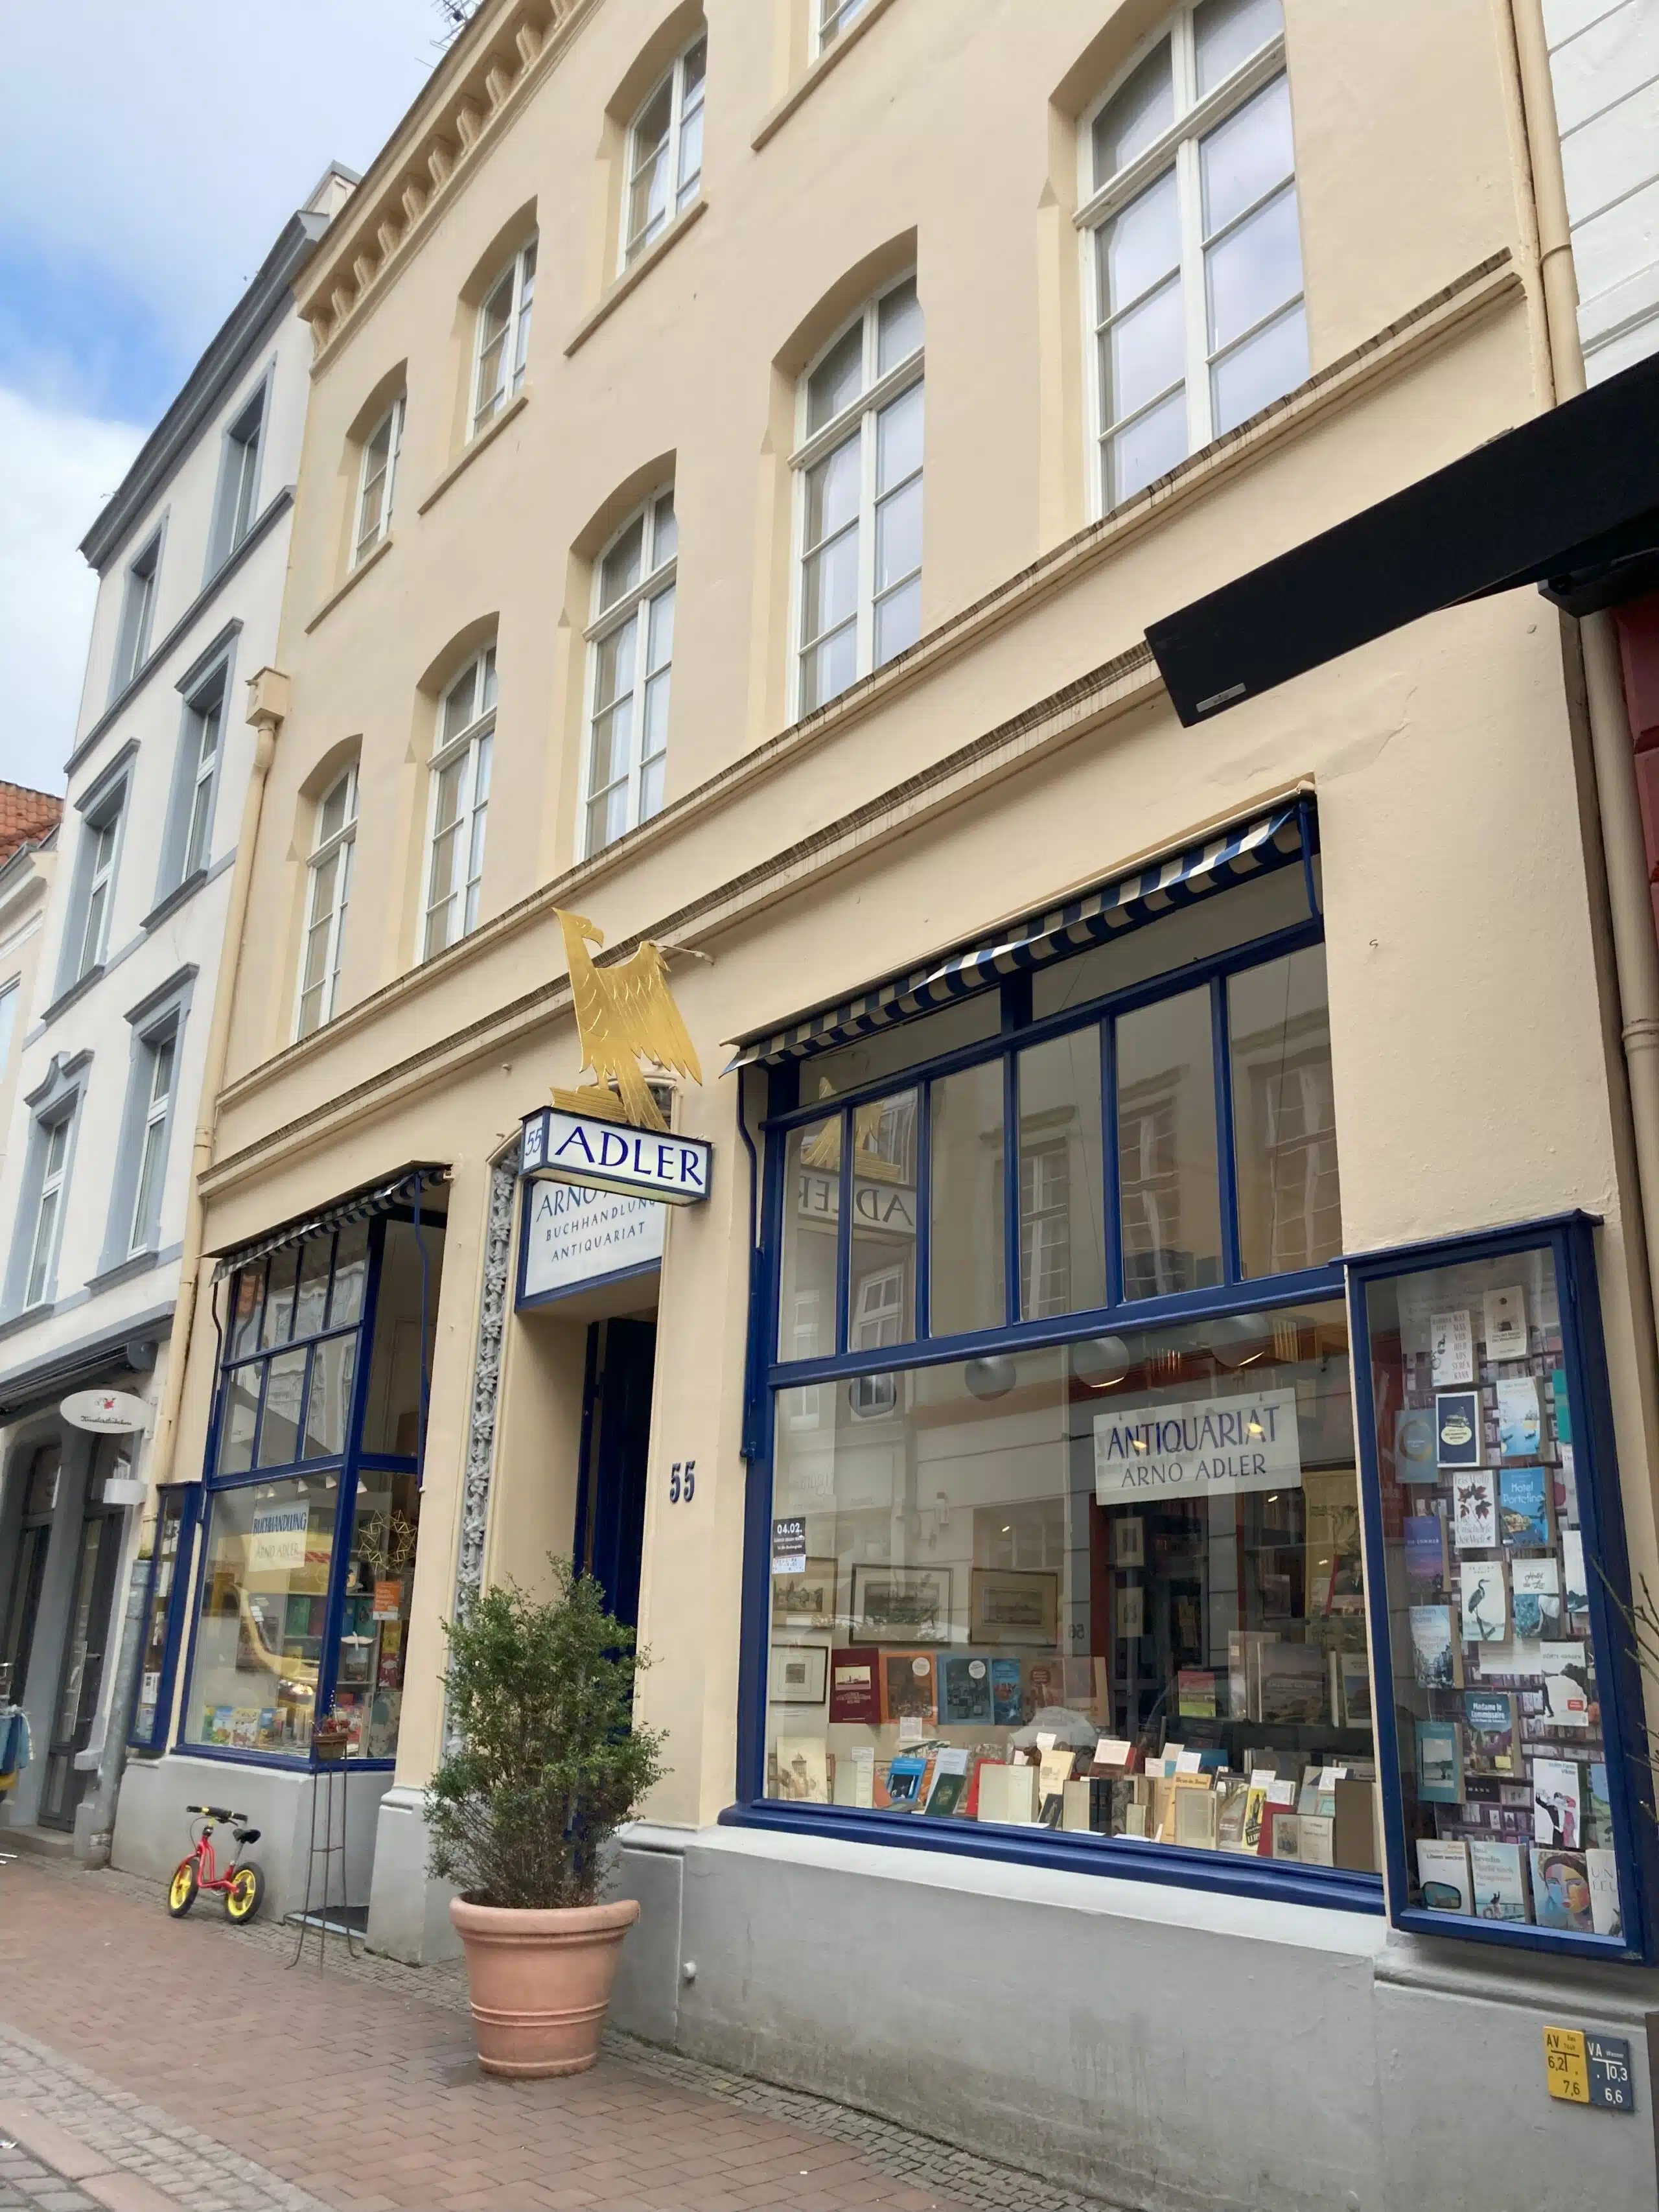 Arno Adler - the bookshop and antiquarian bookshop in Lübeck